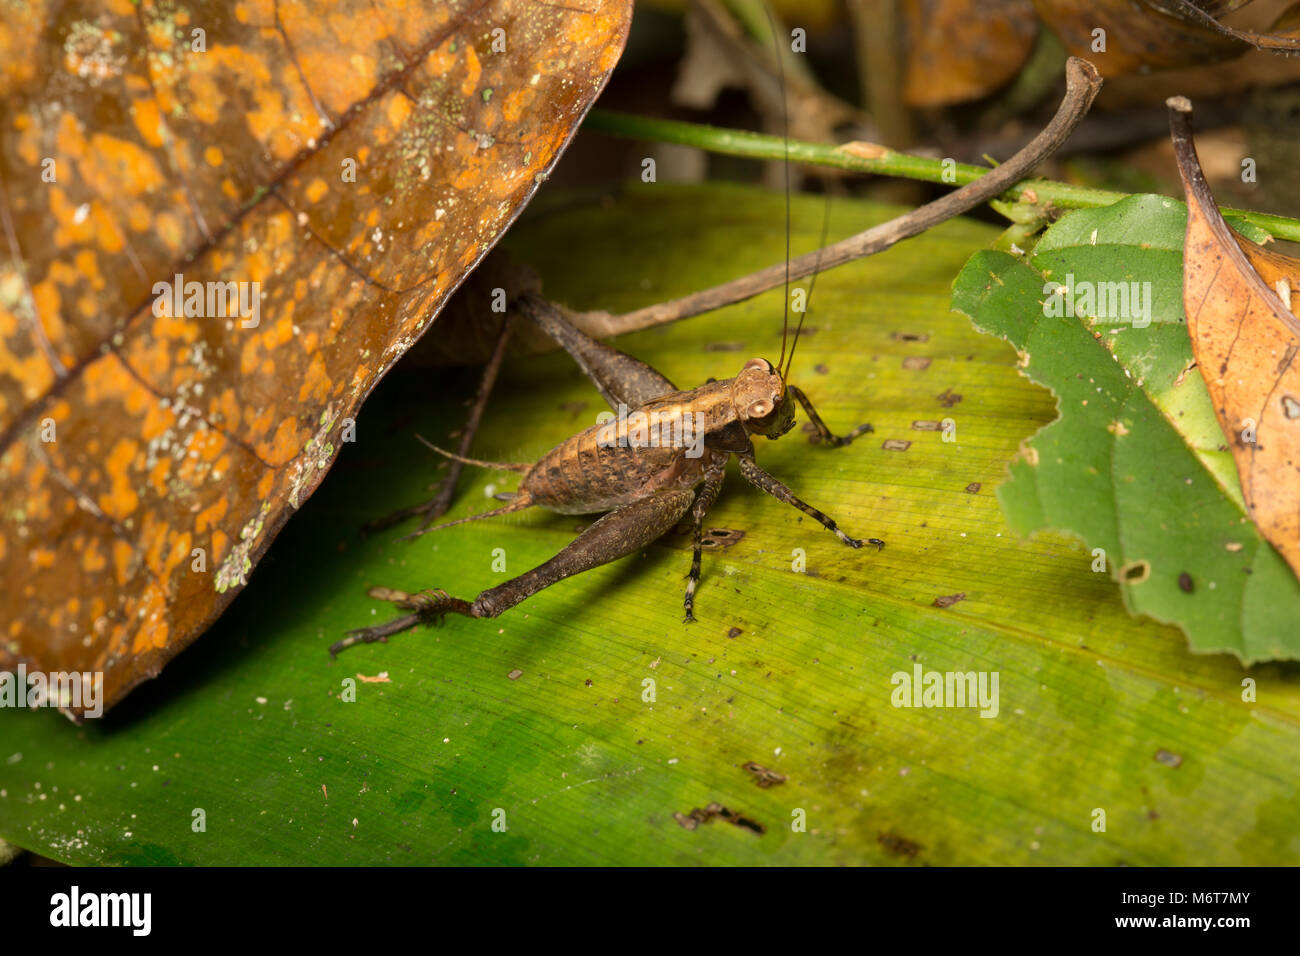 Bush Cricket oder katydid, Suriname, Südamerika Stockfoto